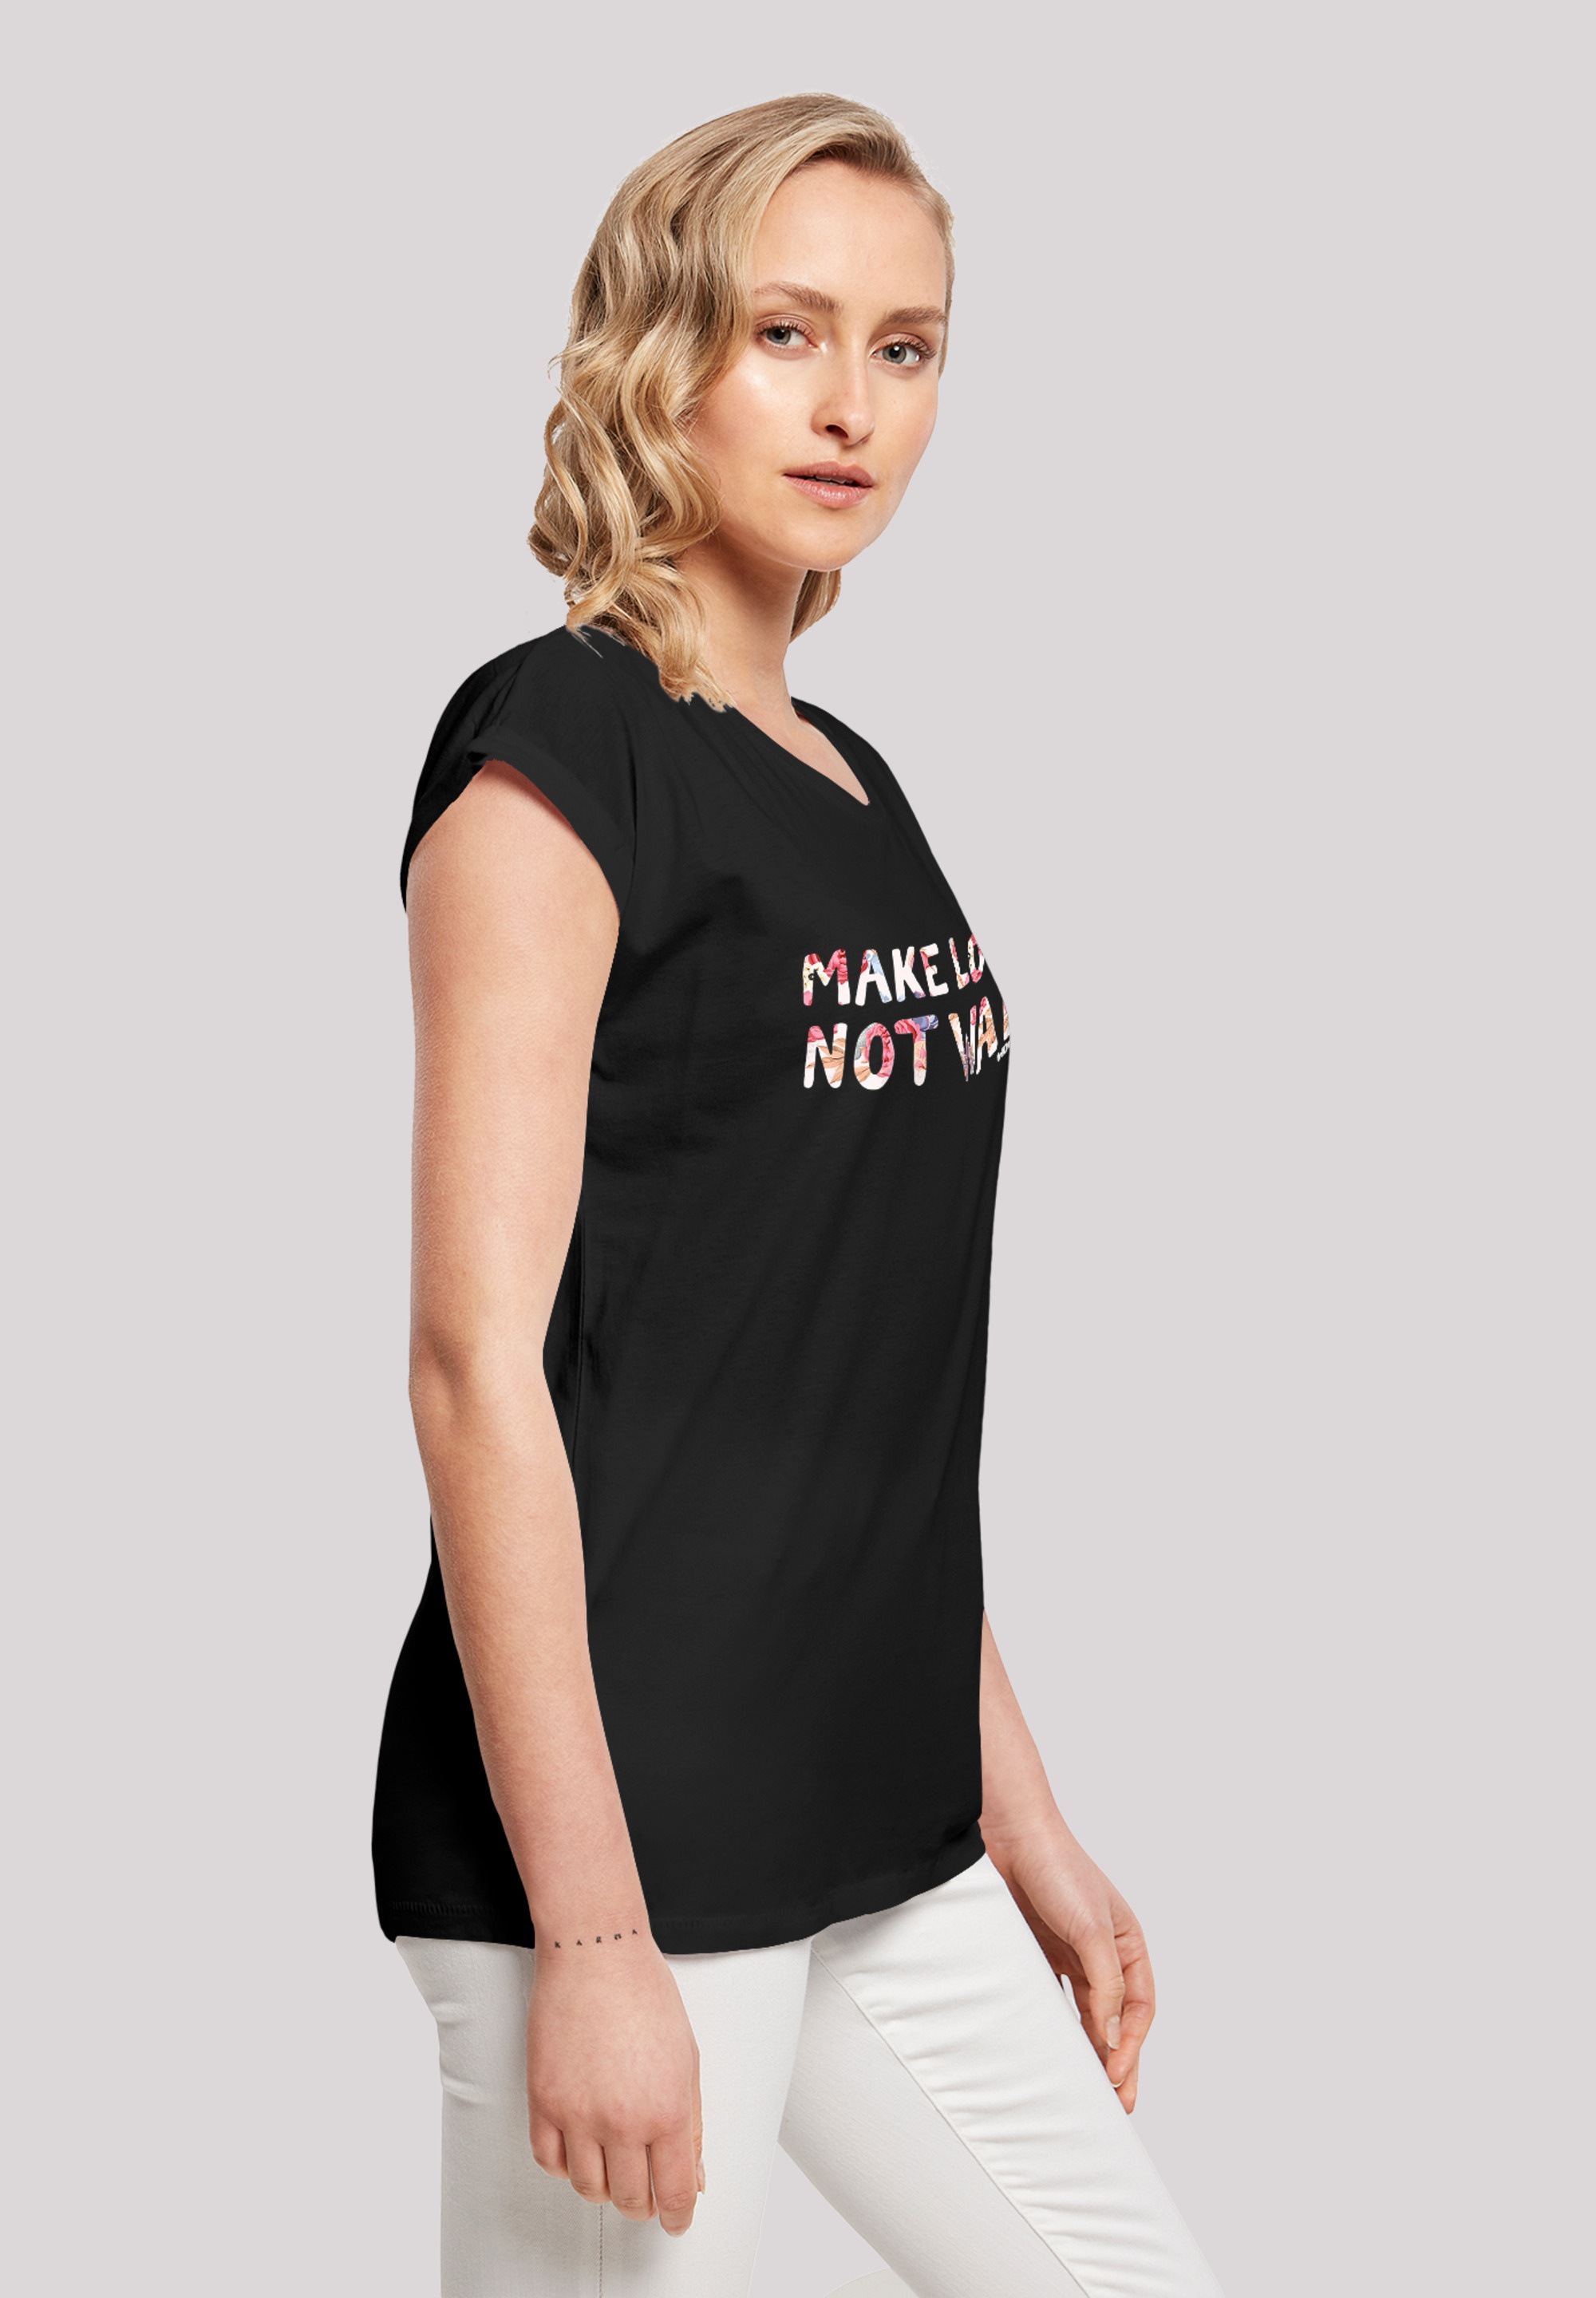 F4NT4STIC T-Shirt »WOODSTOCK Make Love Not War Floral«, Print